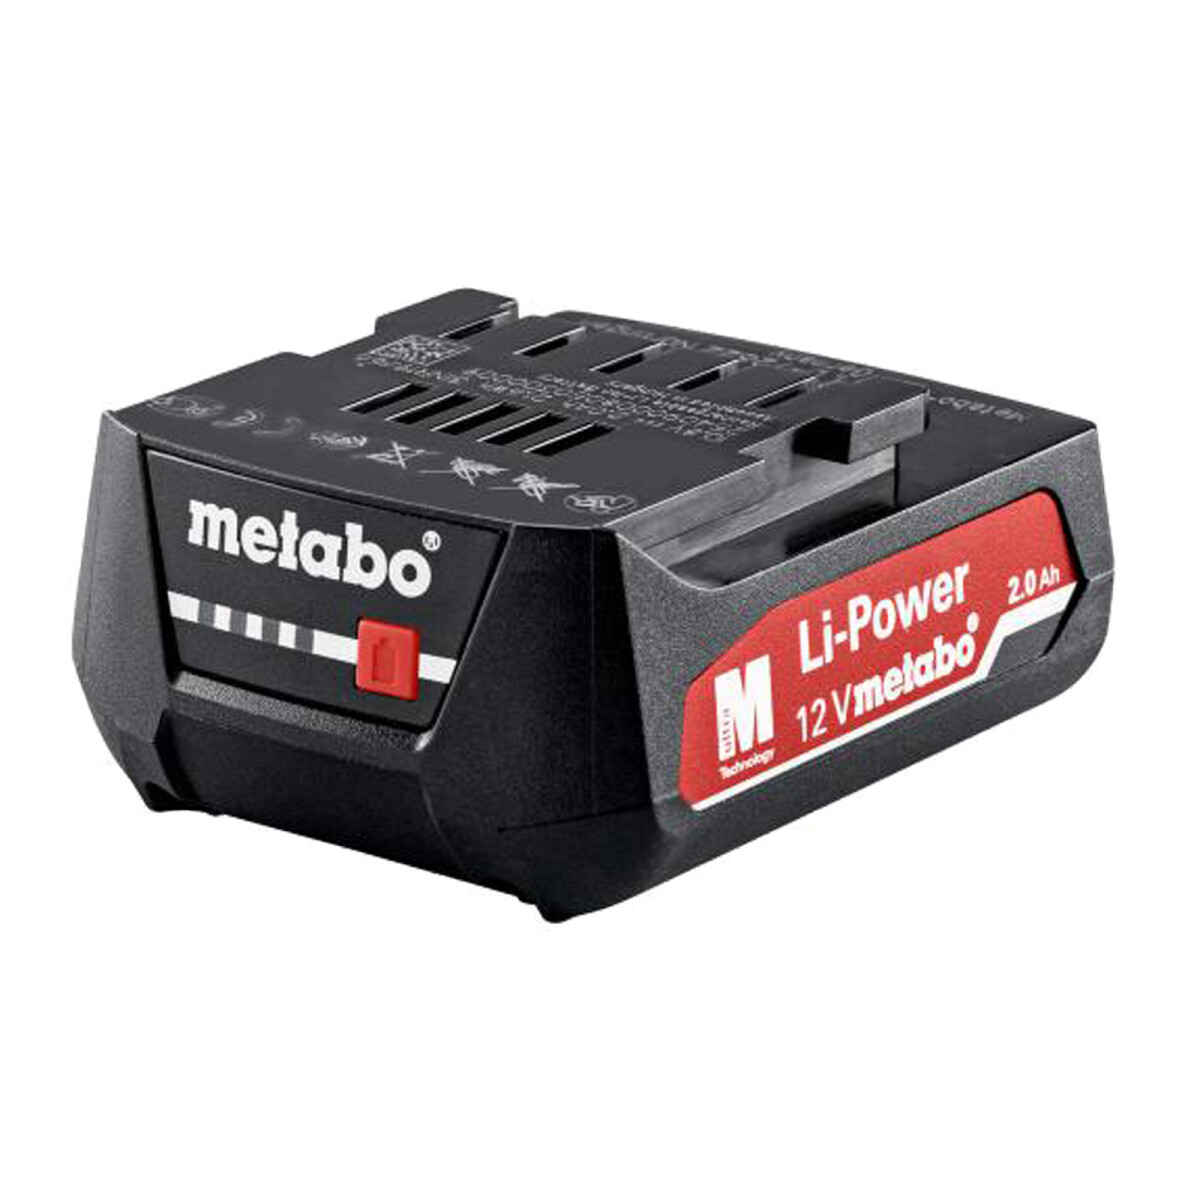 Bateria Metabo 12v 2,0ah Li-power 